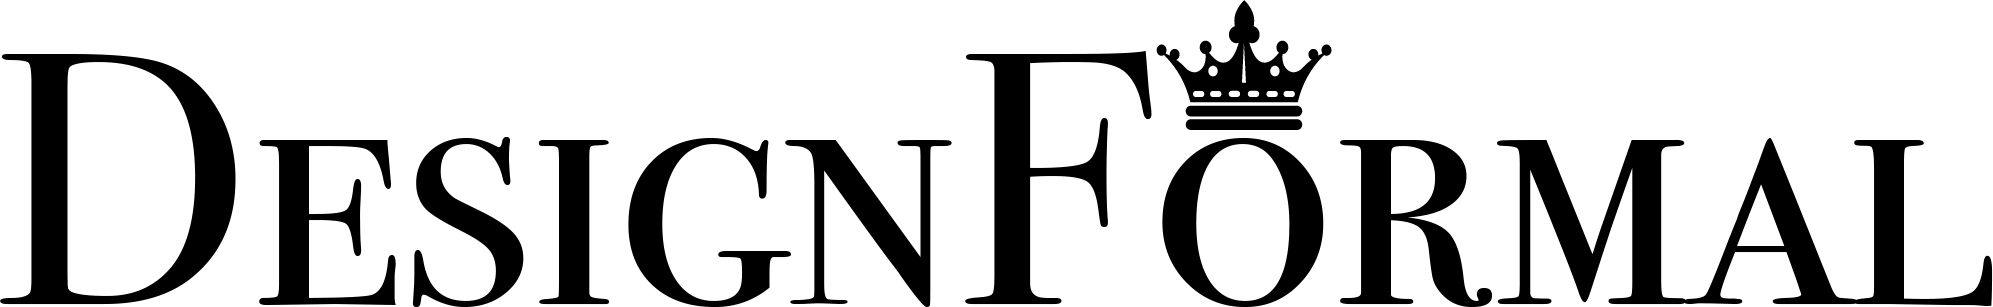 DesignFormal brand logo